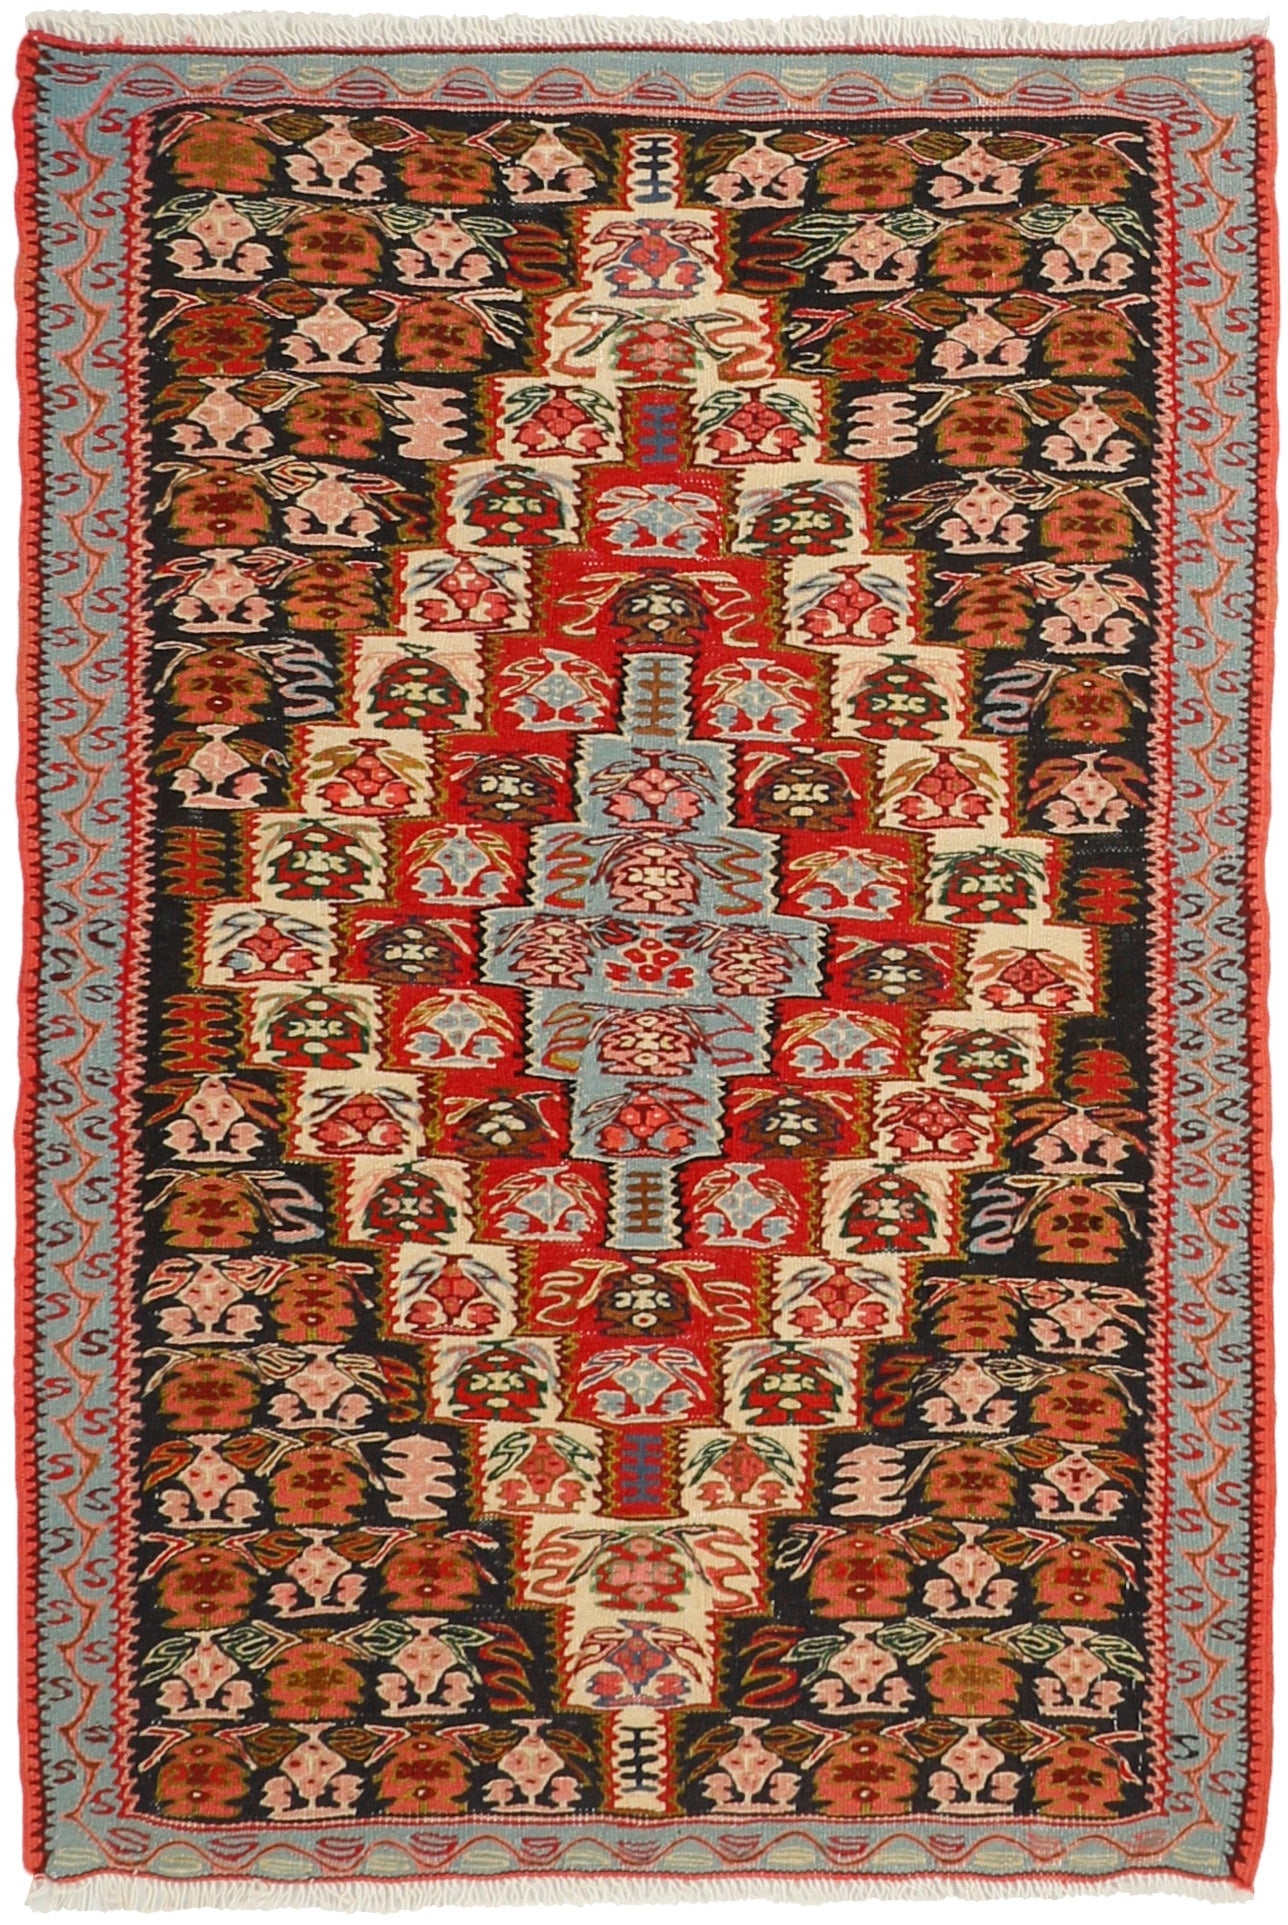 Rectangular natural beige rug with terracotta red, grey and black aztec design and black tassel border